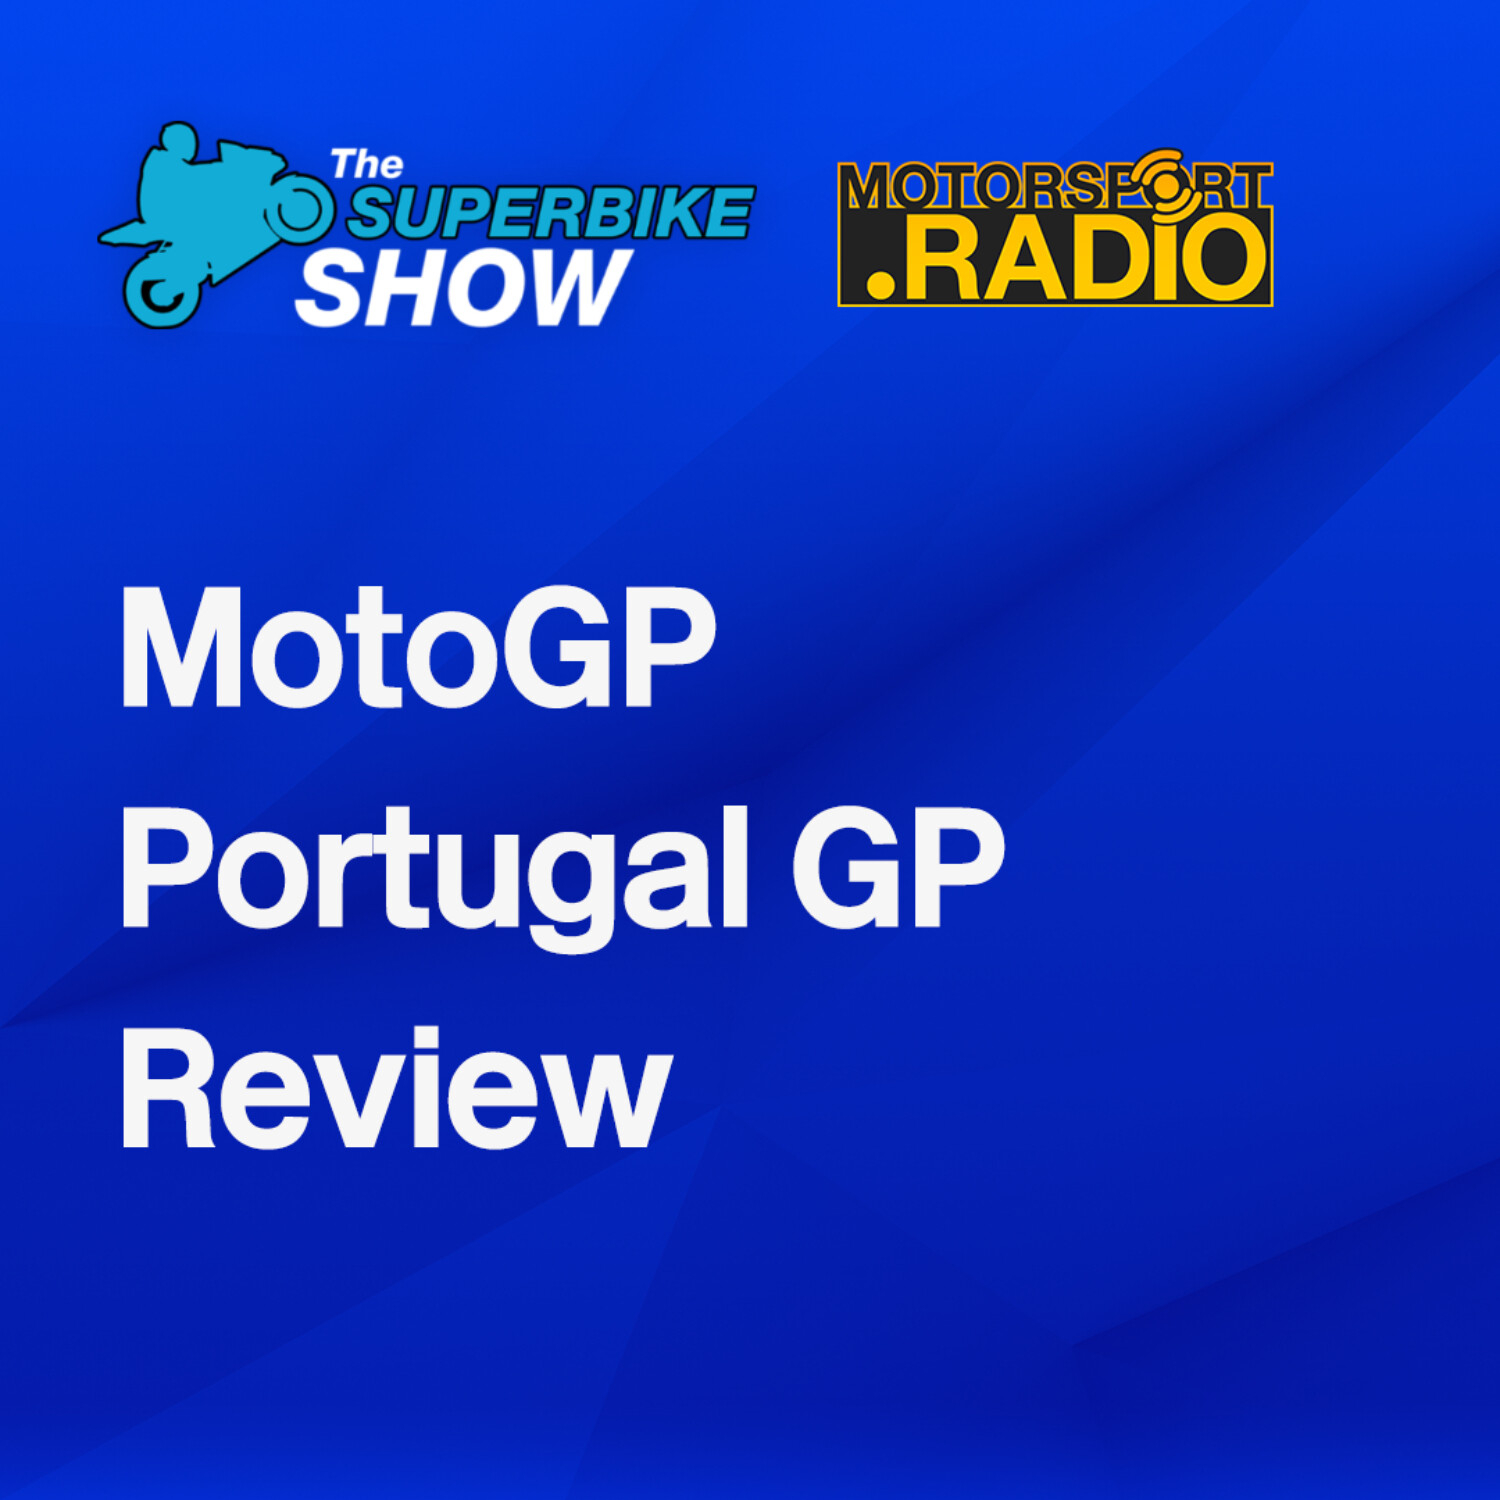 The Superbike Show - #MotoGP #PortugalGP